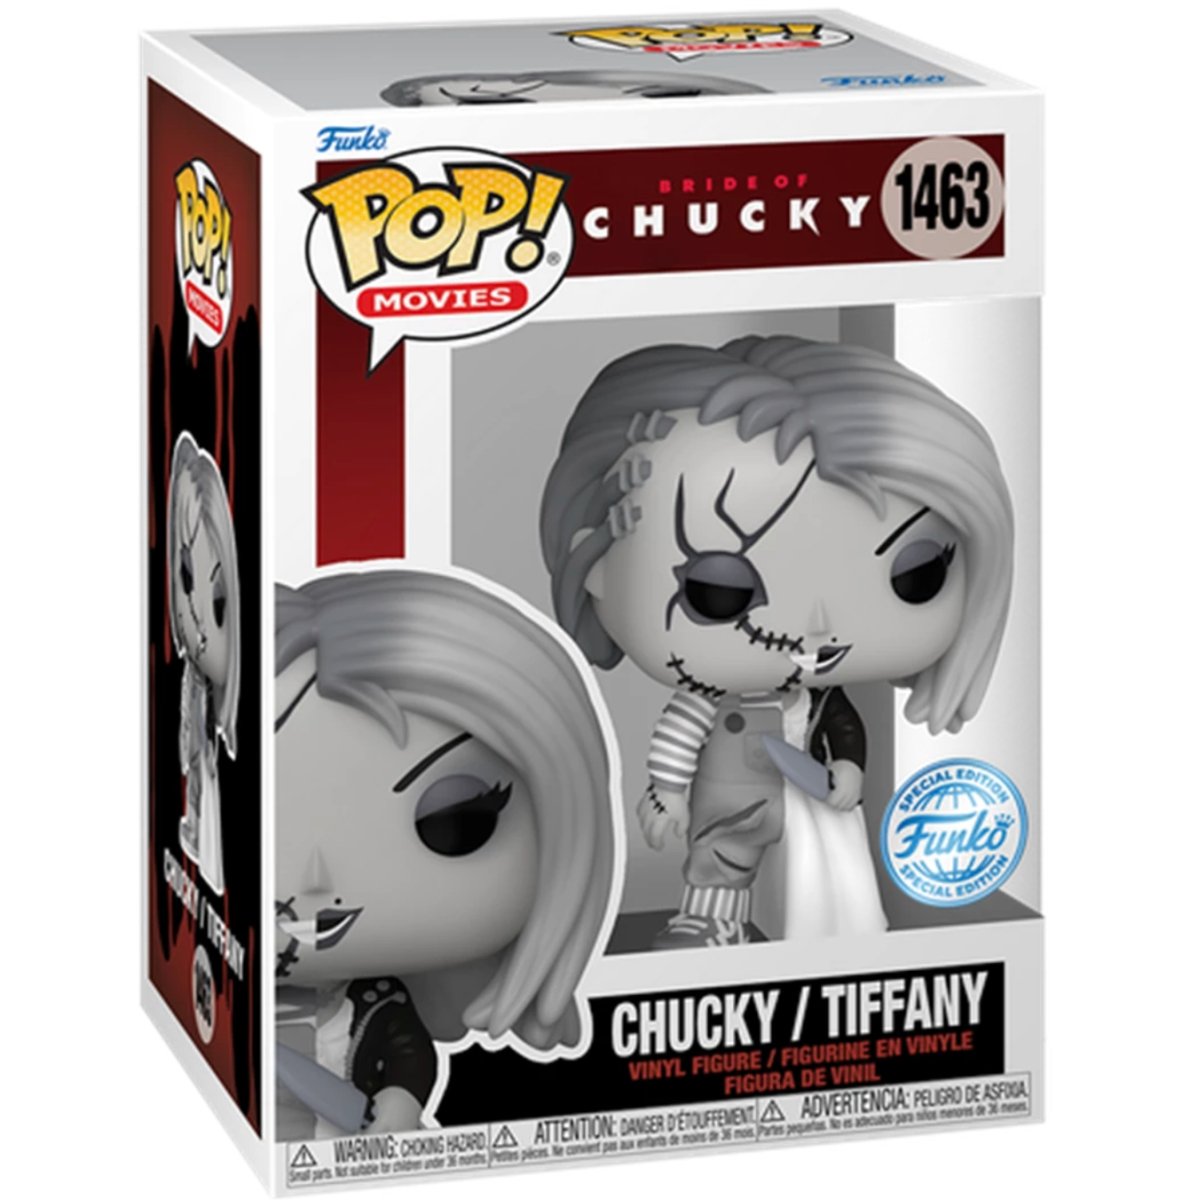 Bride of Chucky - Chucky / Tiffany (Special Edition) #1463 - Funko Pop! Vinyl Movies - Persona Toys